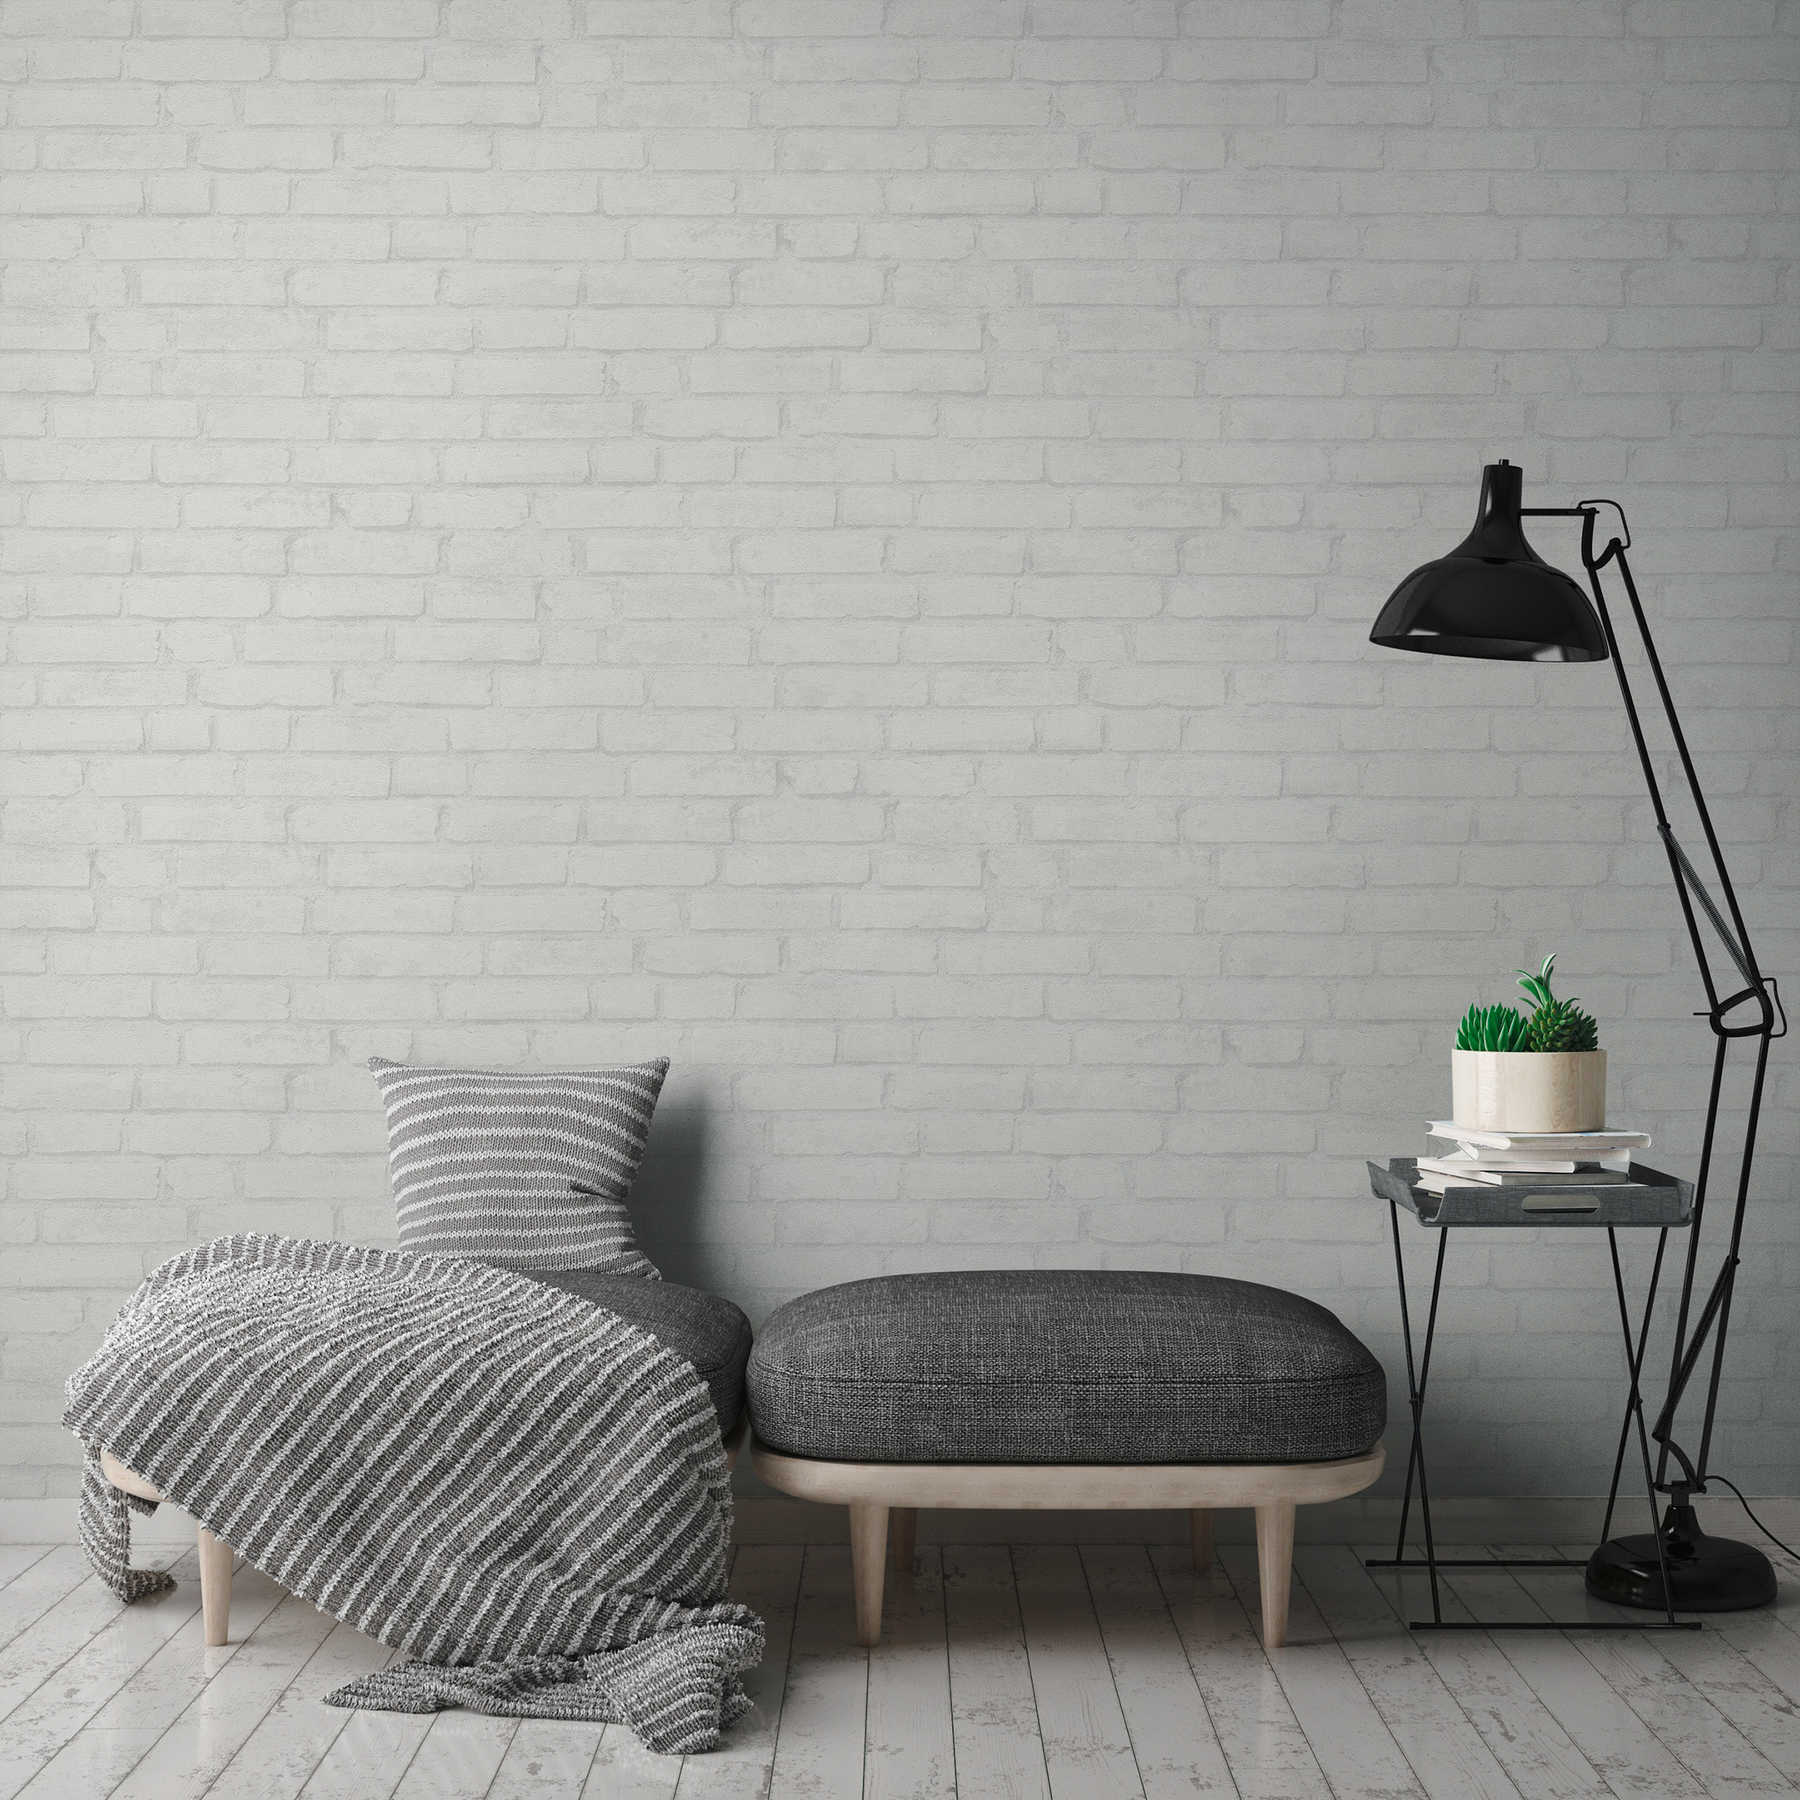             Light stone wallpaper brick pattern in industrial design - white, grey
        